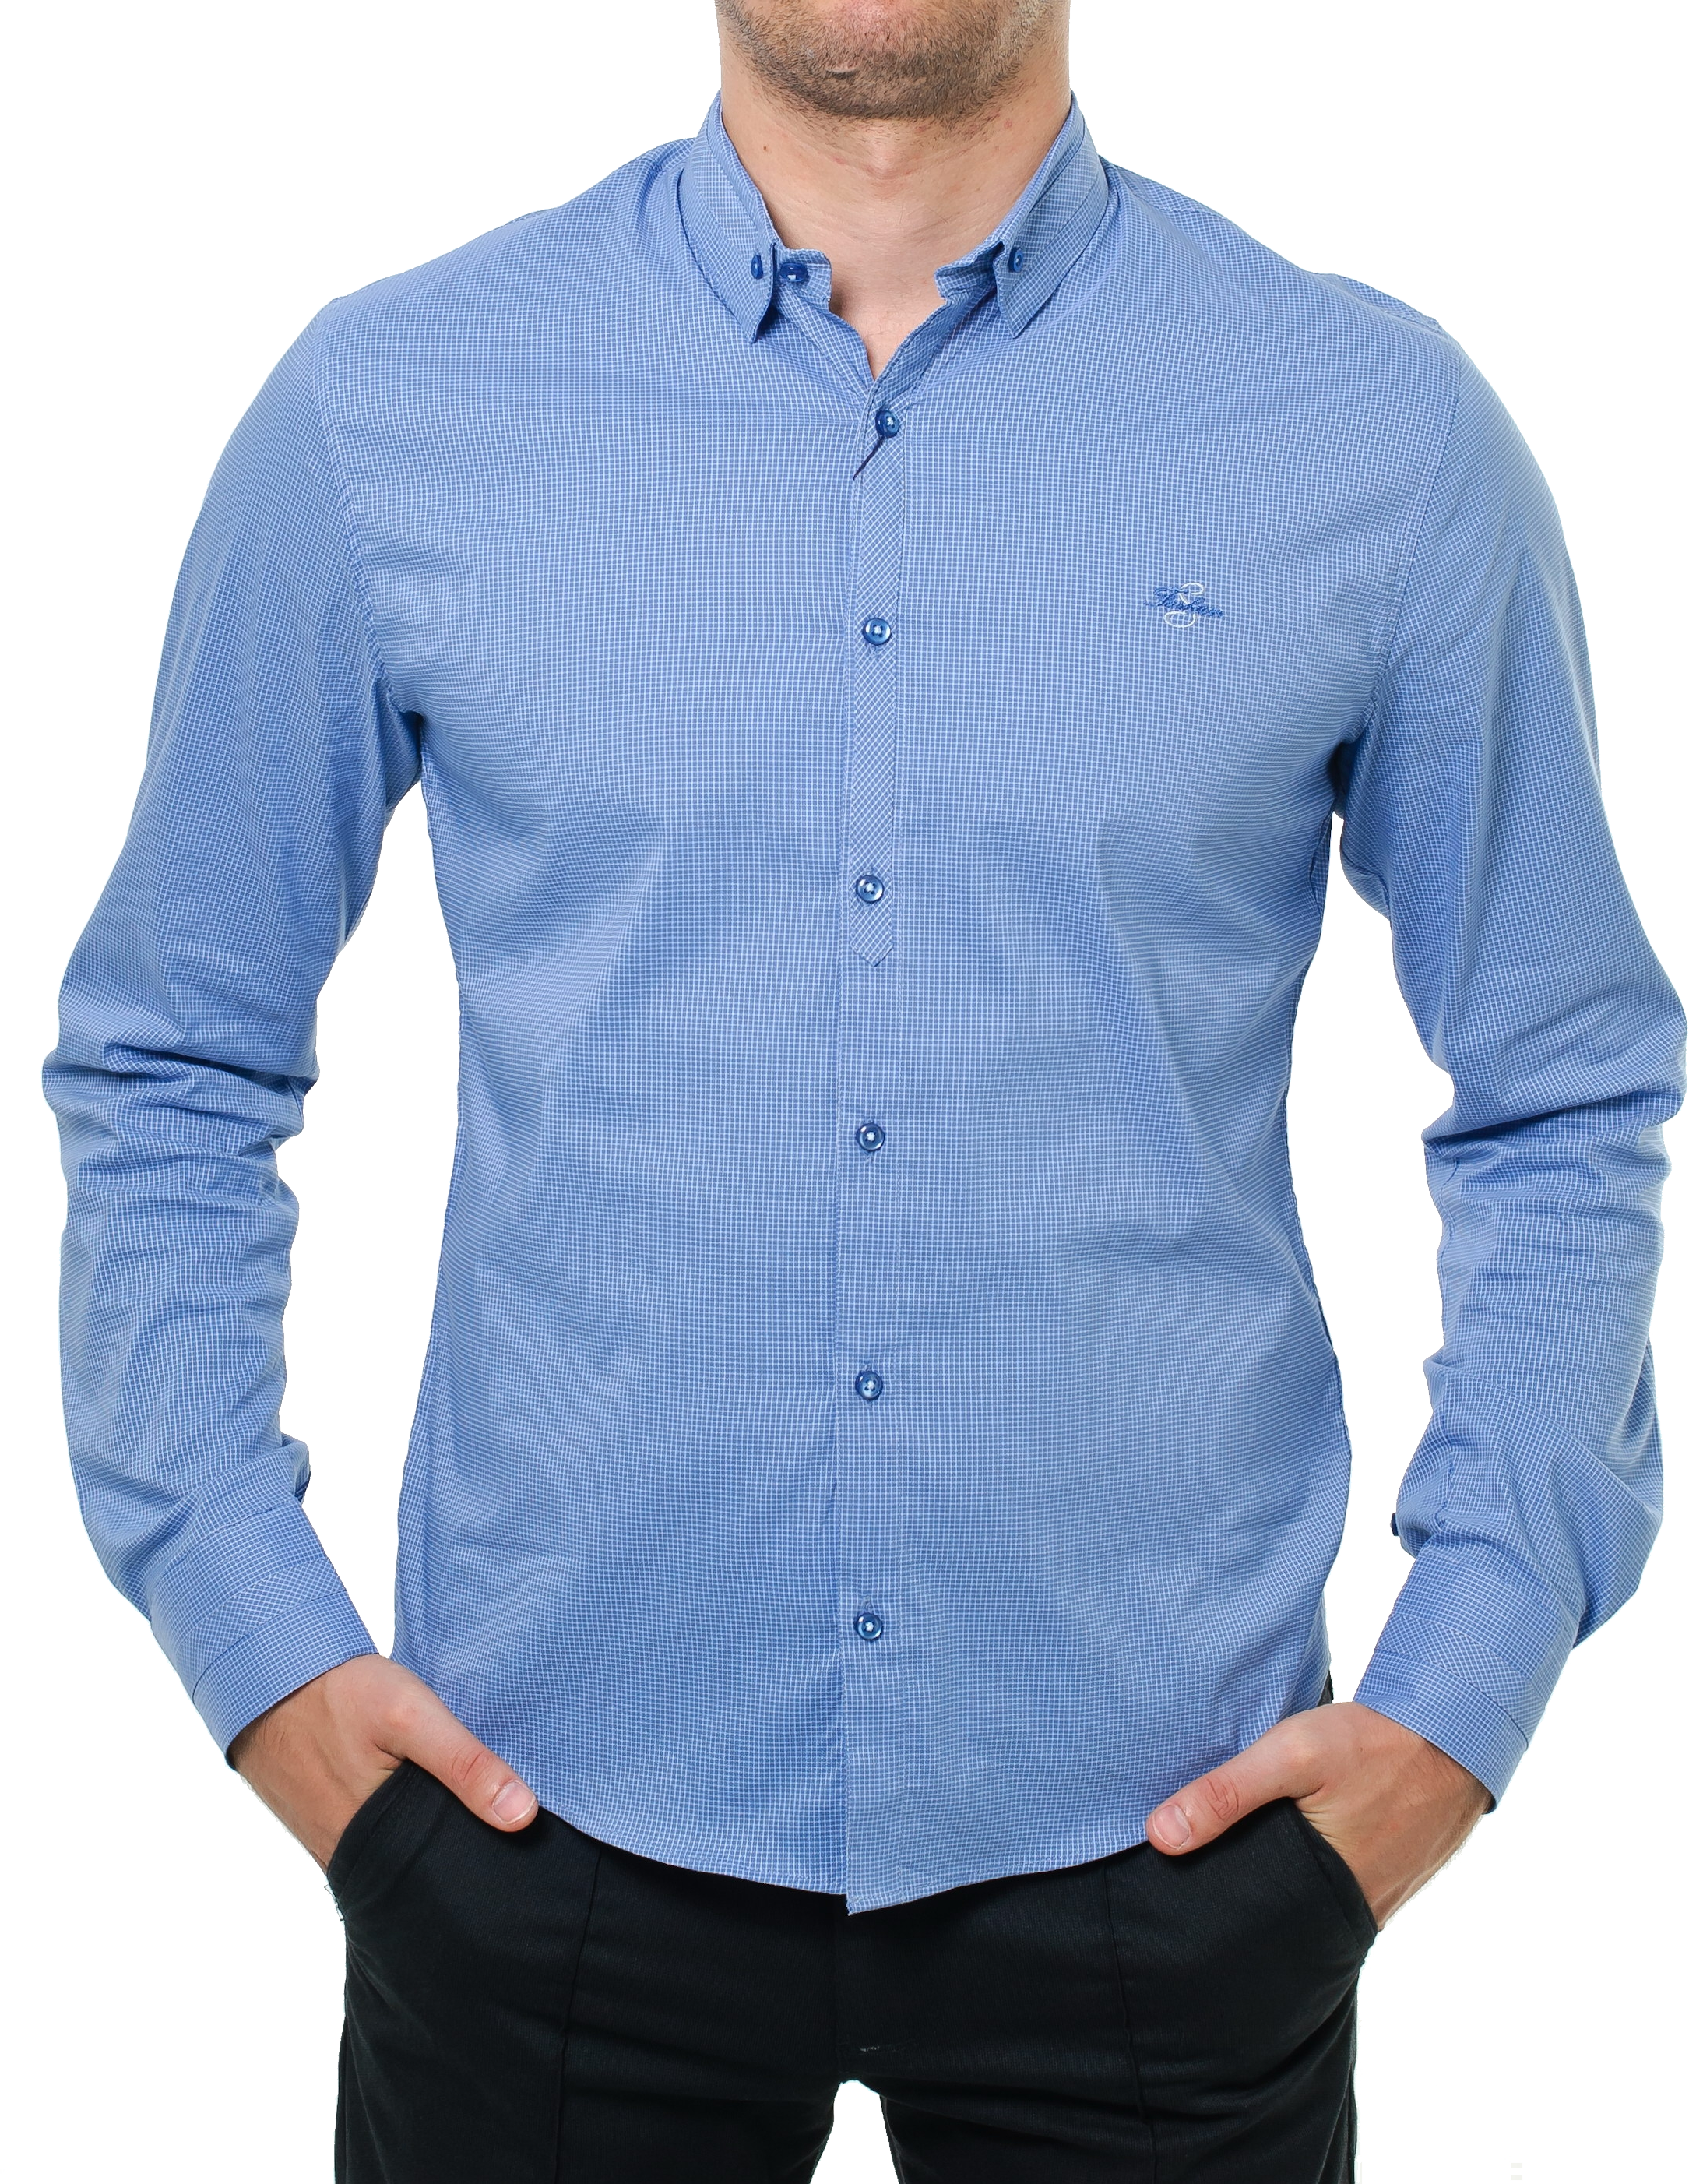 Blue Long Sleeve Shirt PNG Image